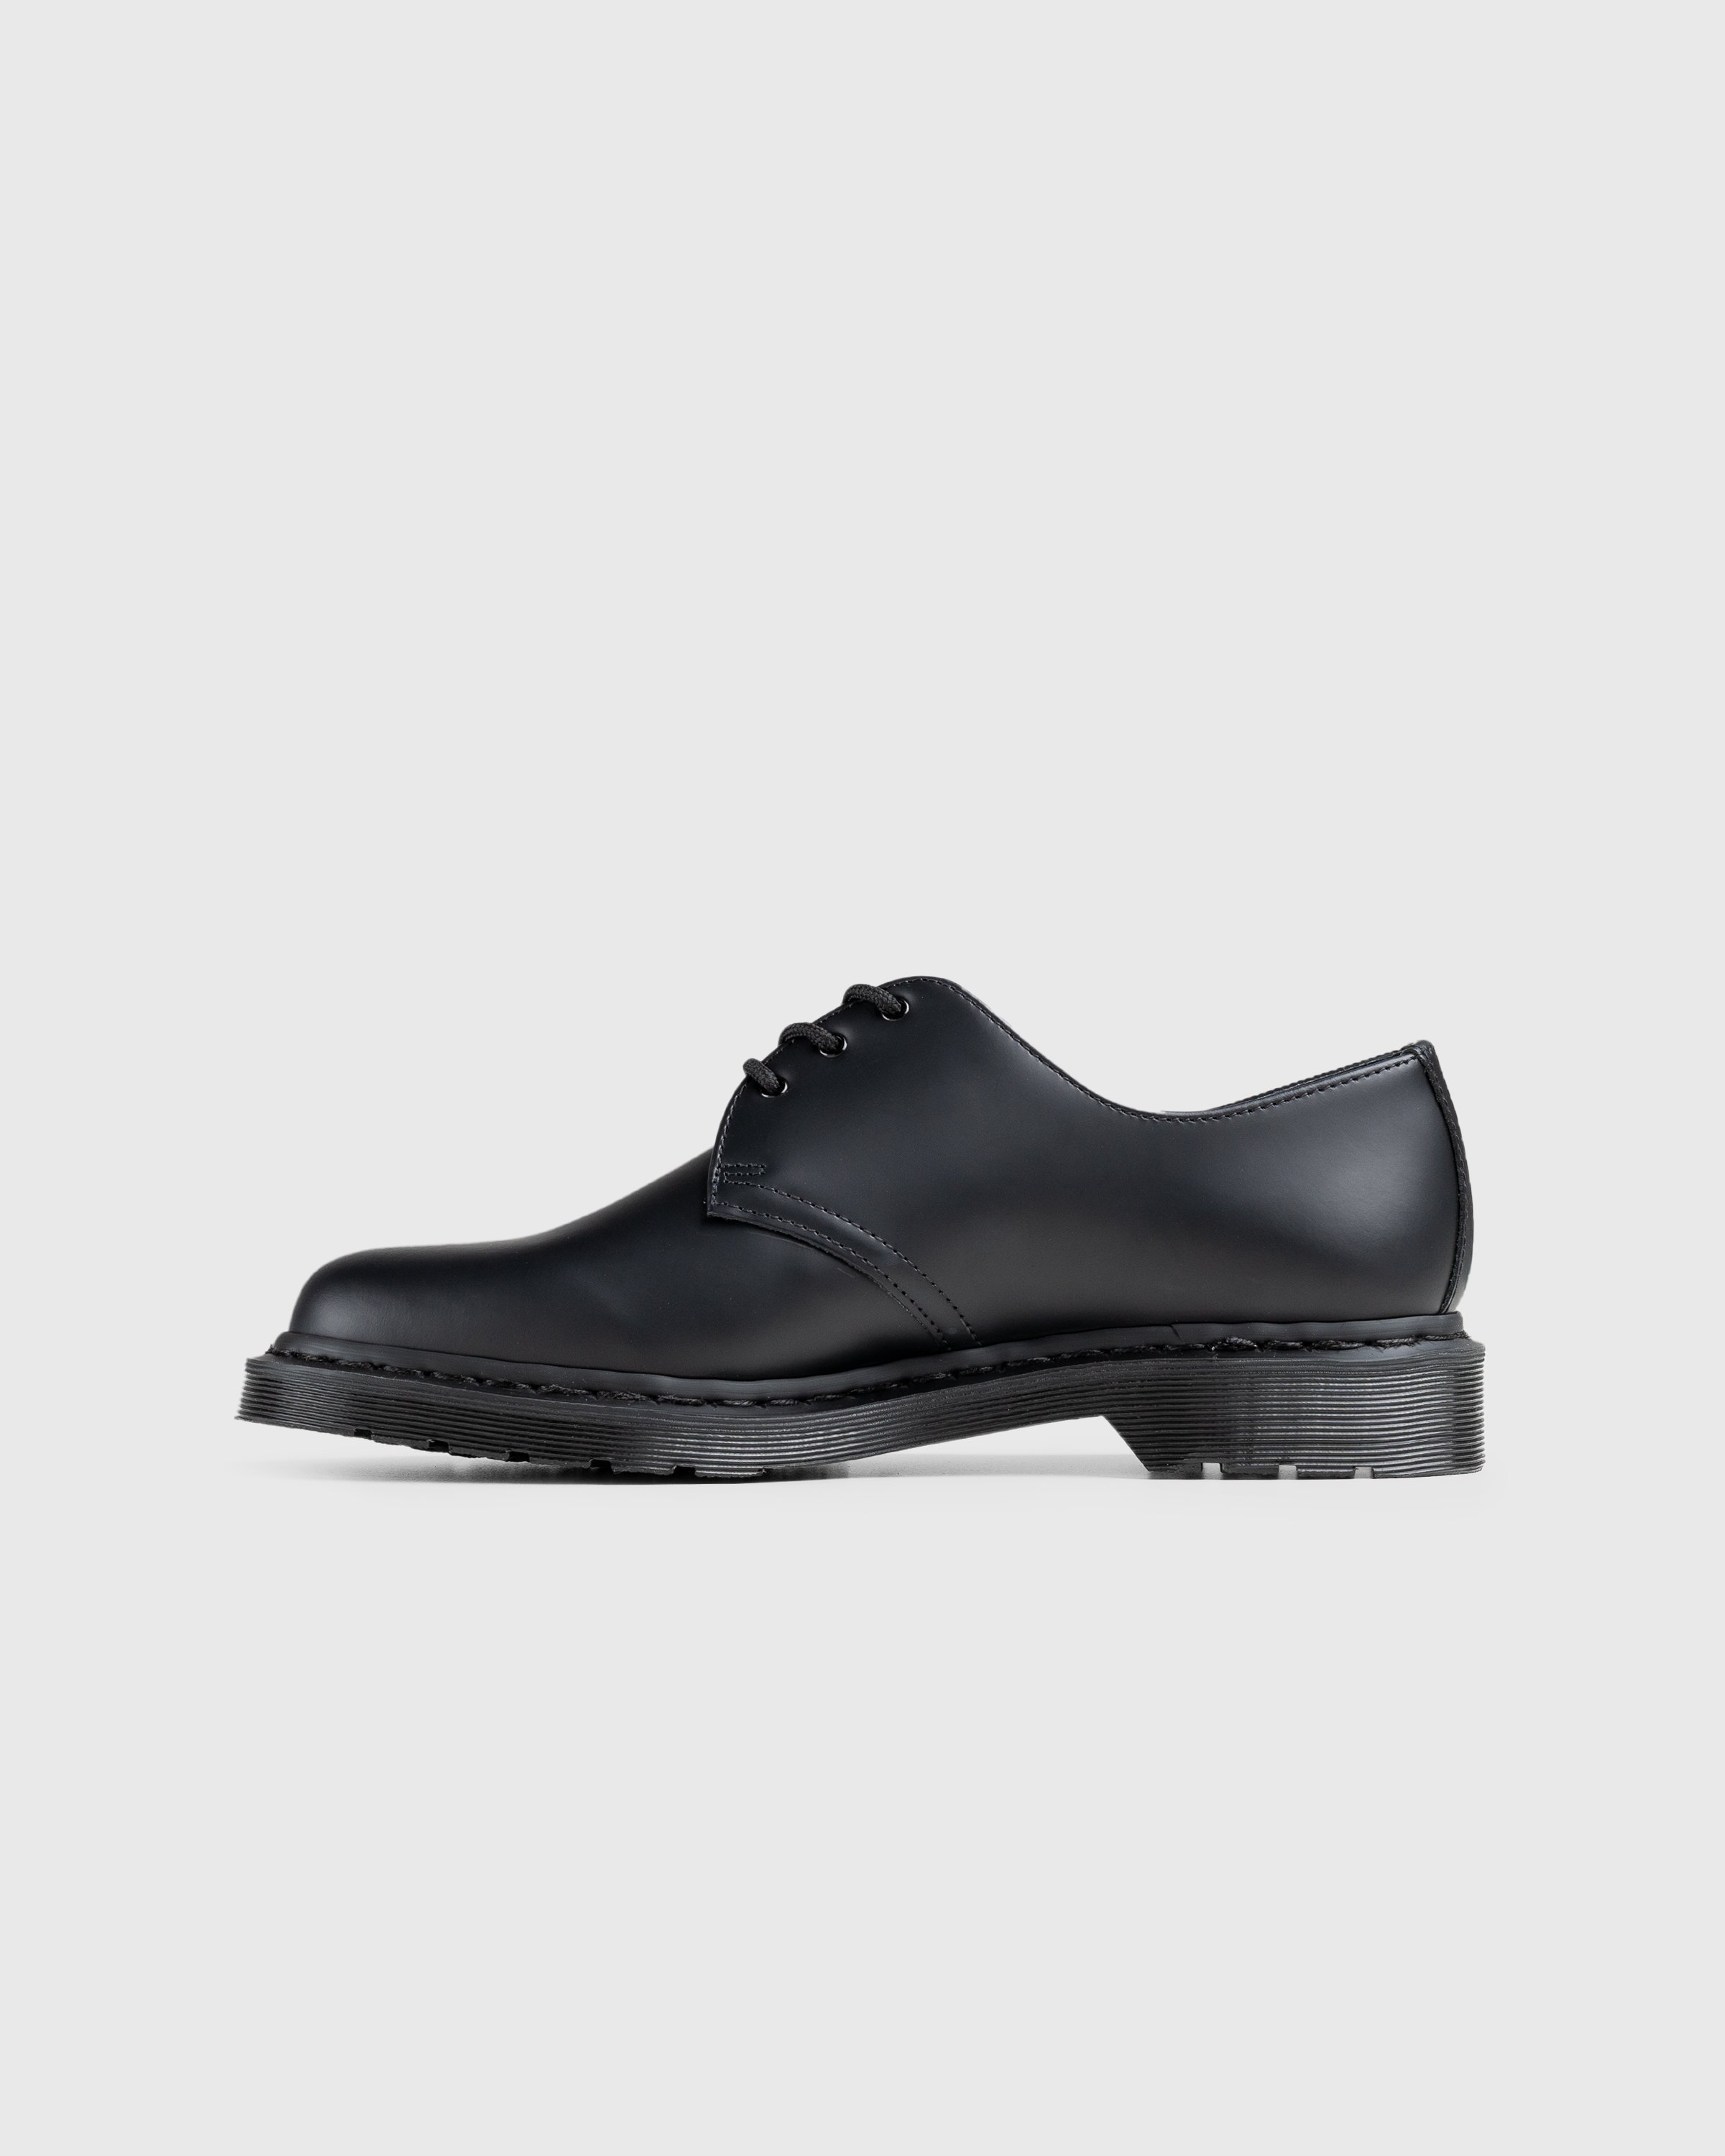 Dr. Martens - 1461 Mono Black Smooth - Footwear - Black - Image 2